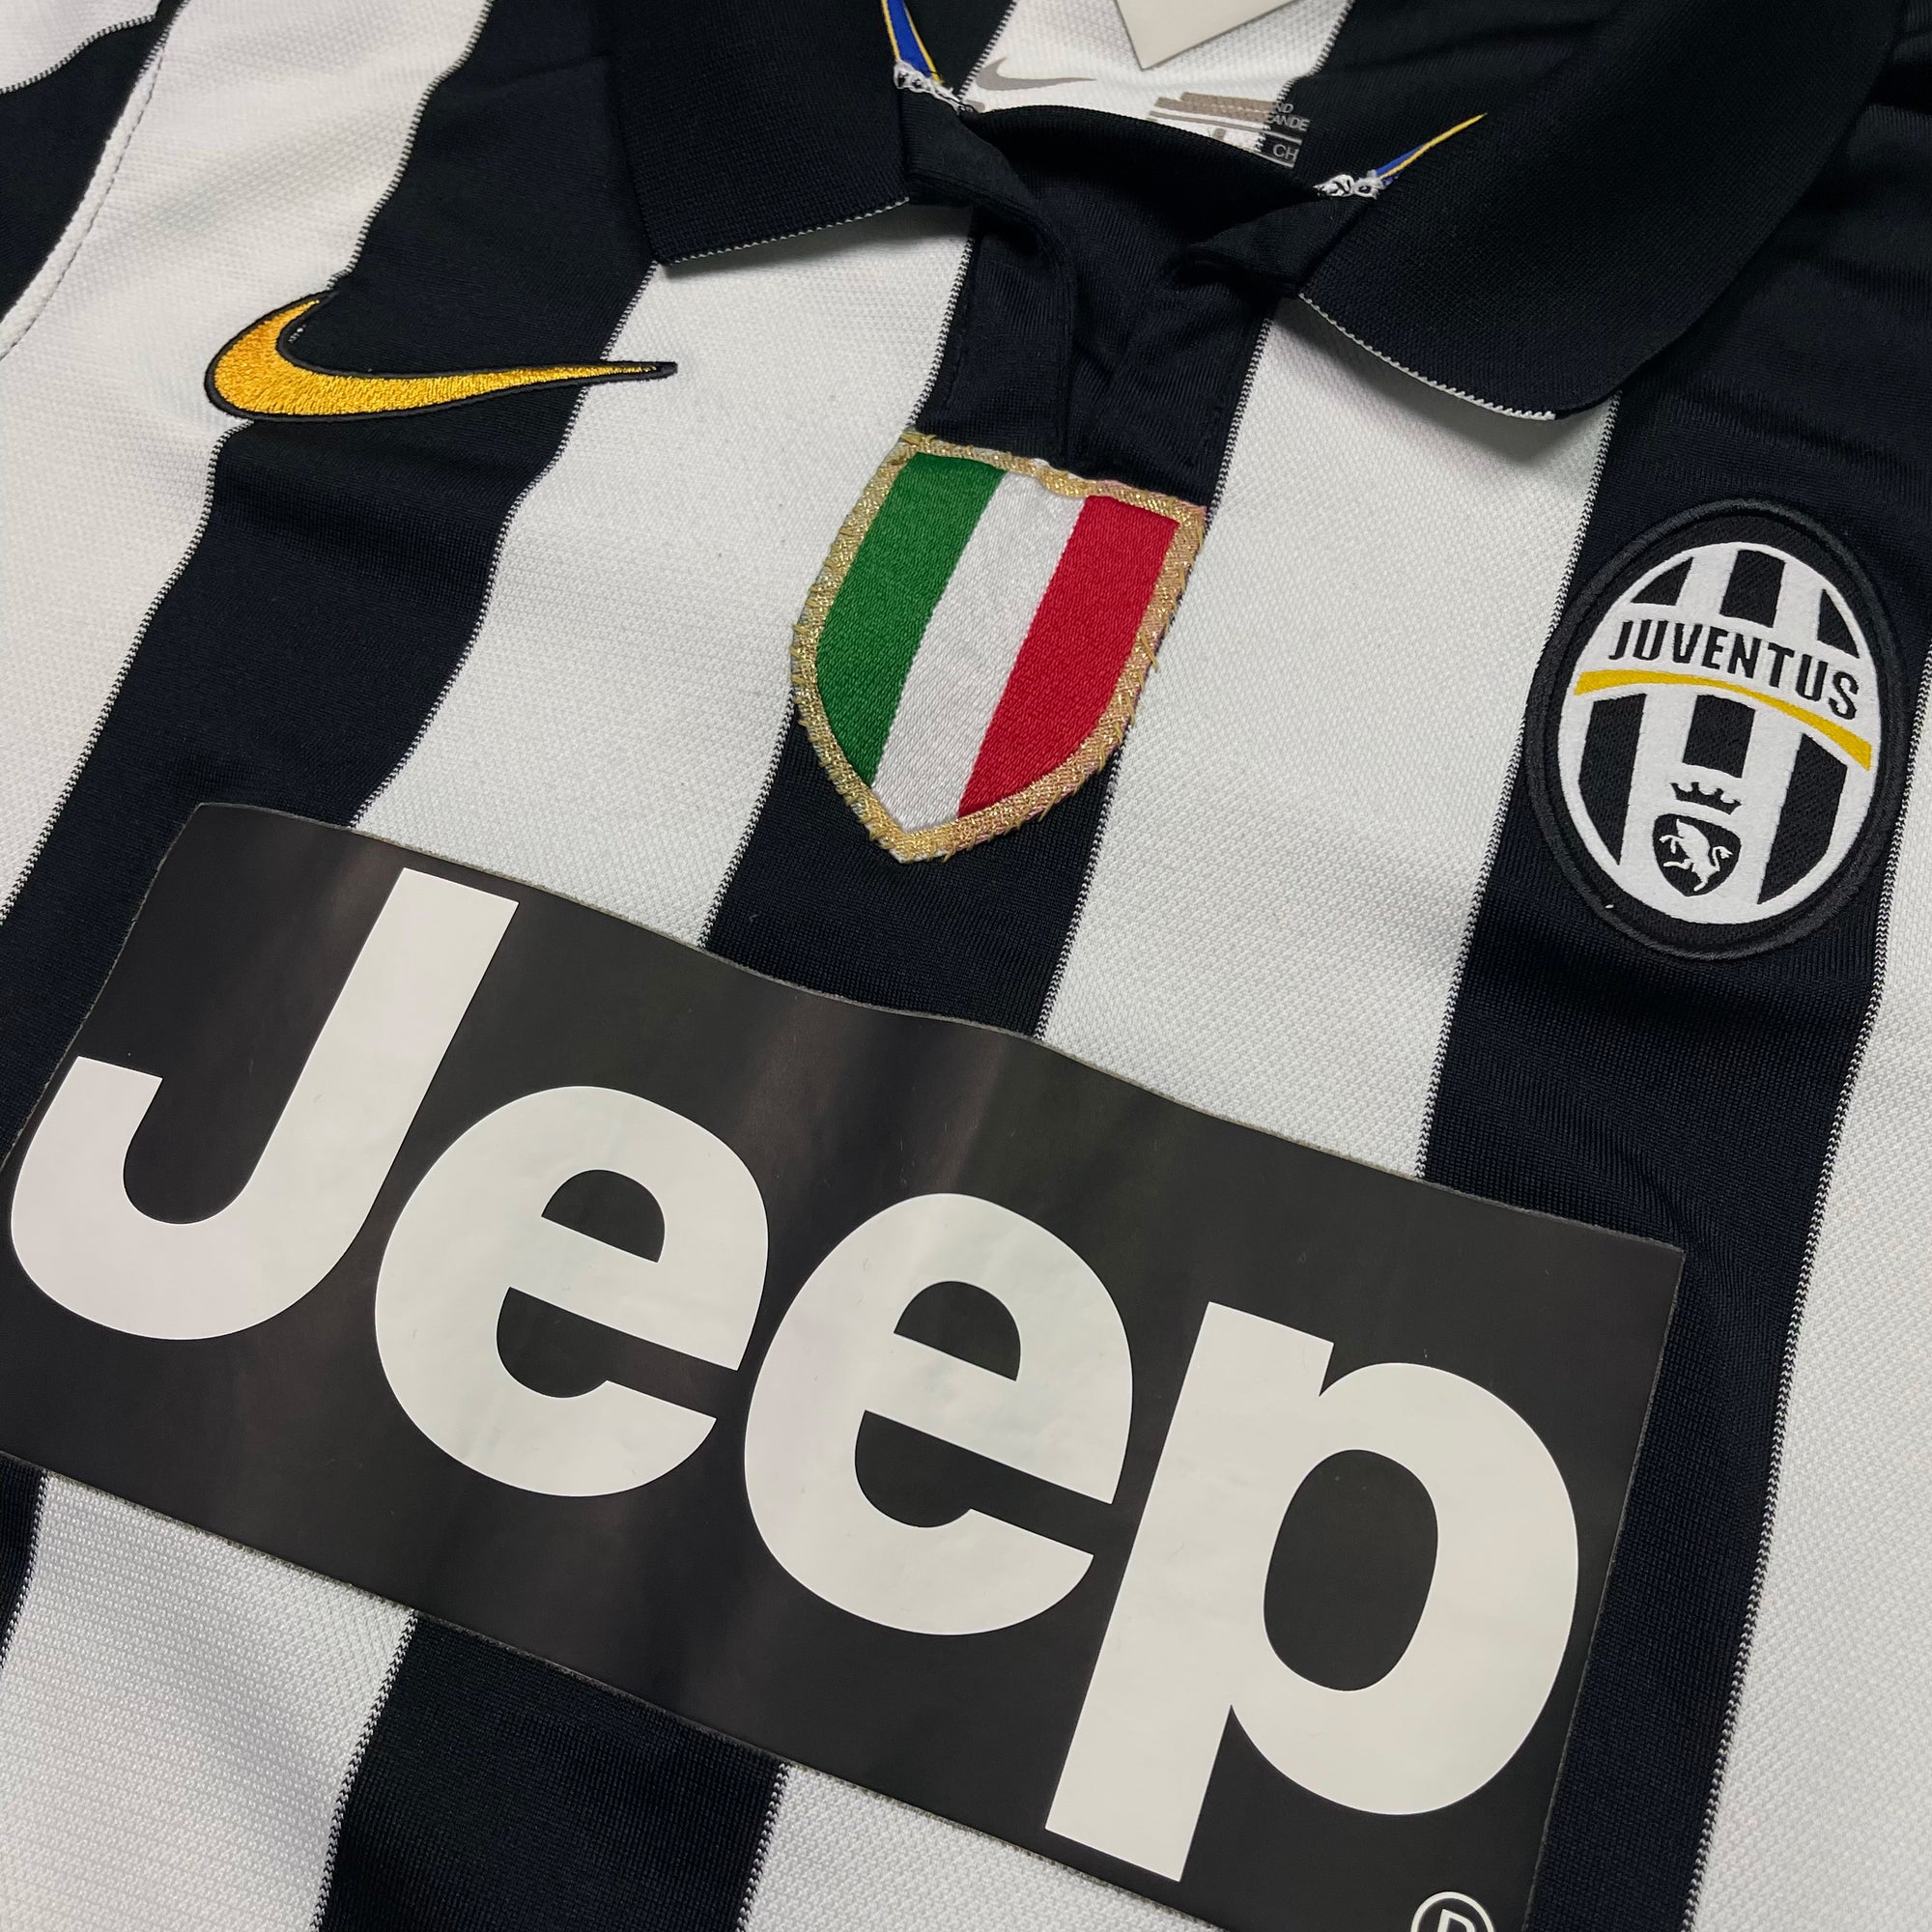 Maillot de Foot Juventus - Nike - Noir